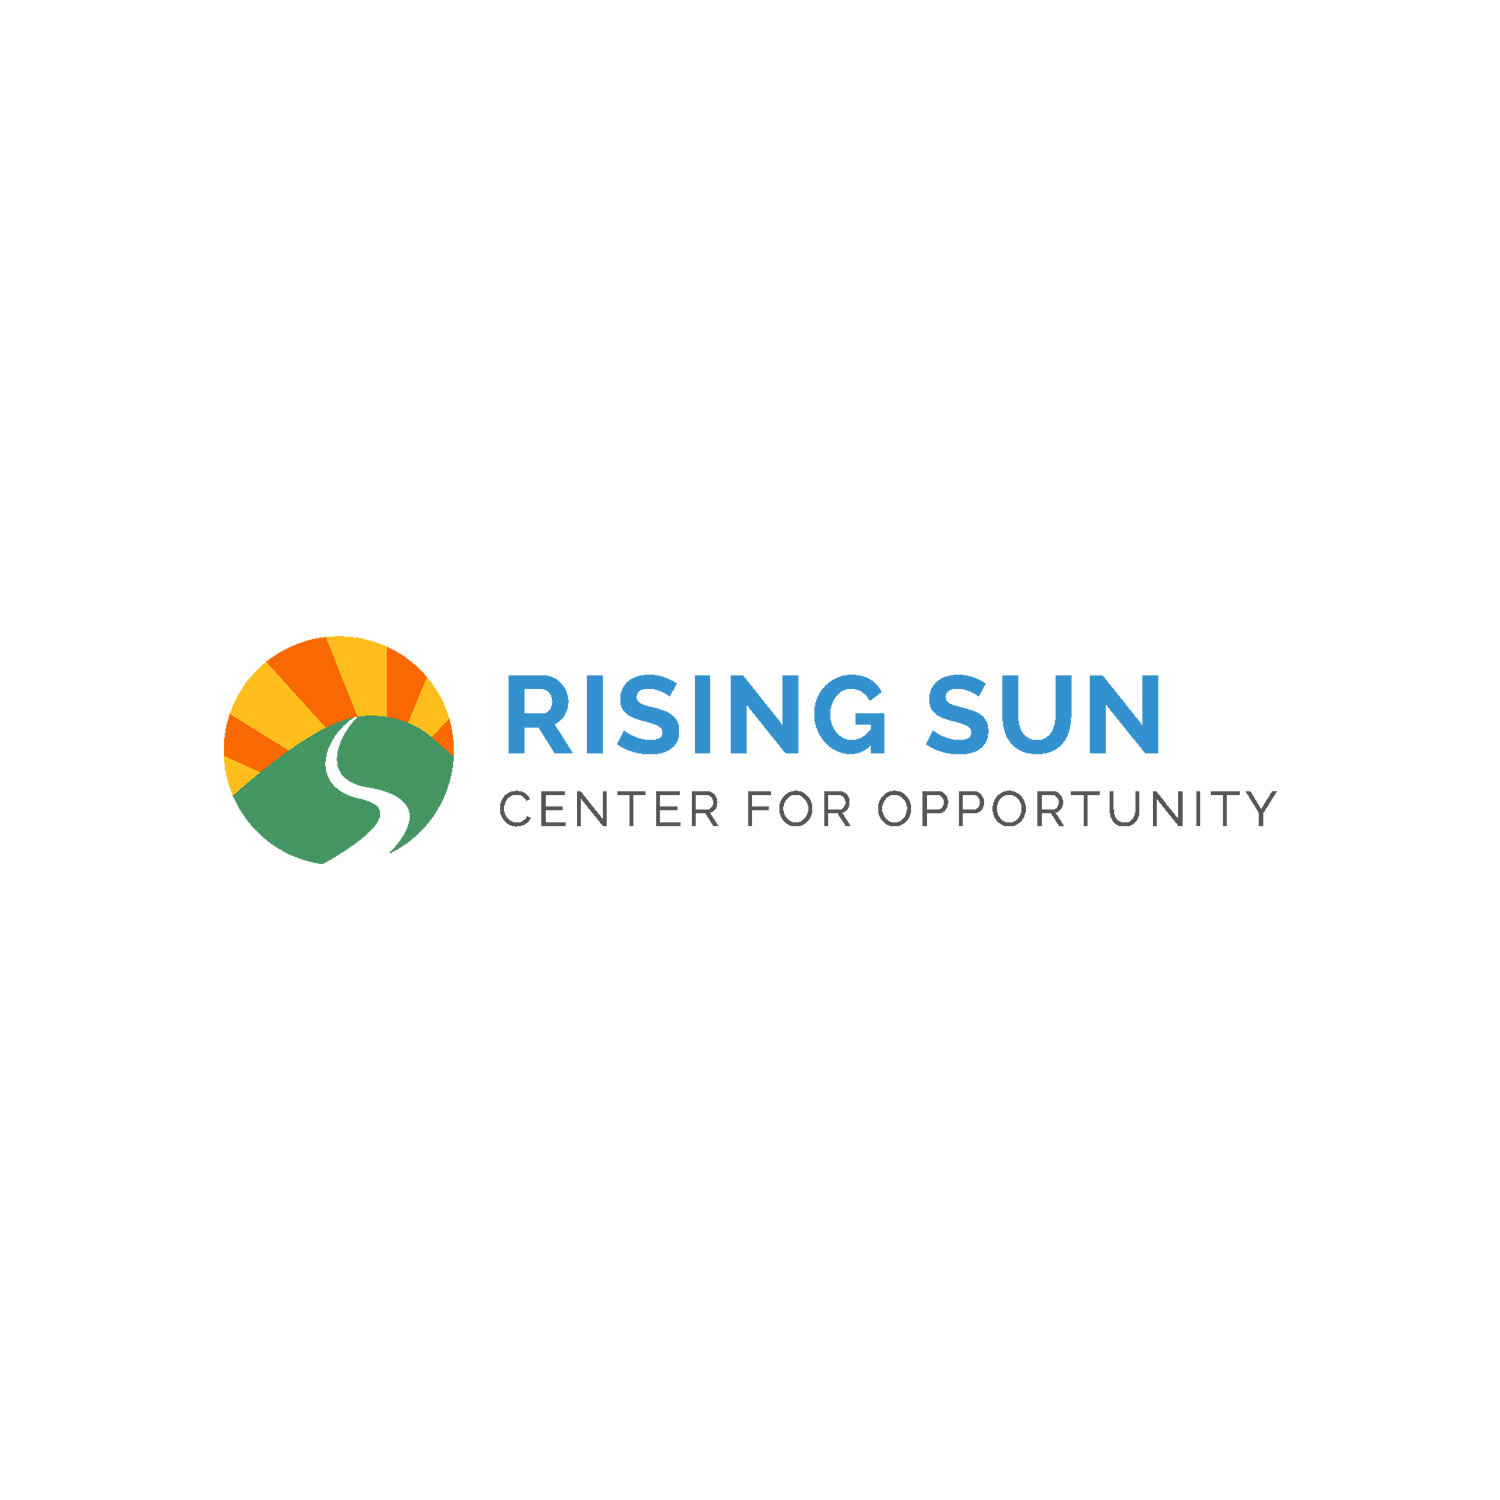 An Open Door - Rising Sun Center for Opportunity